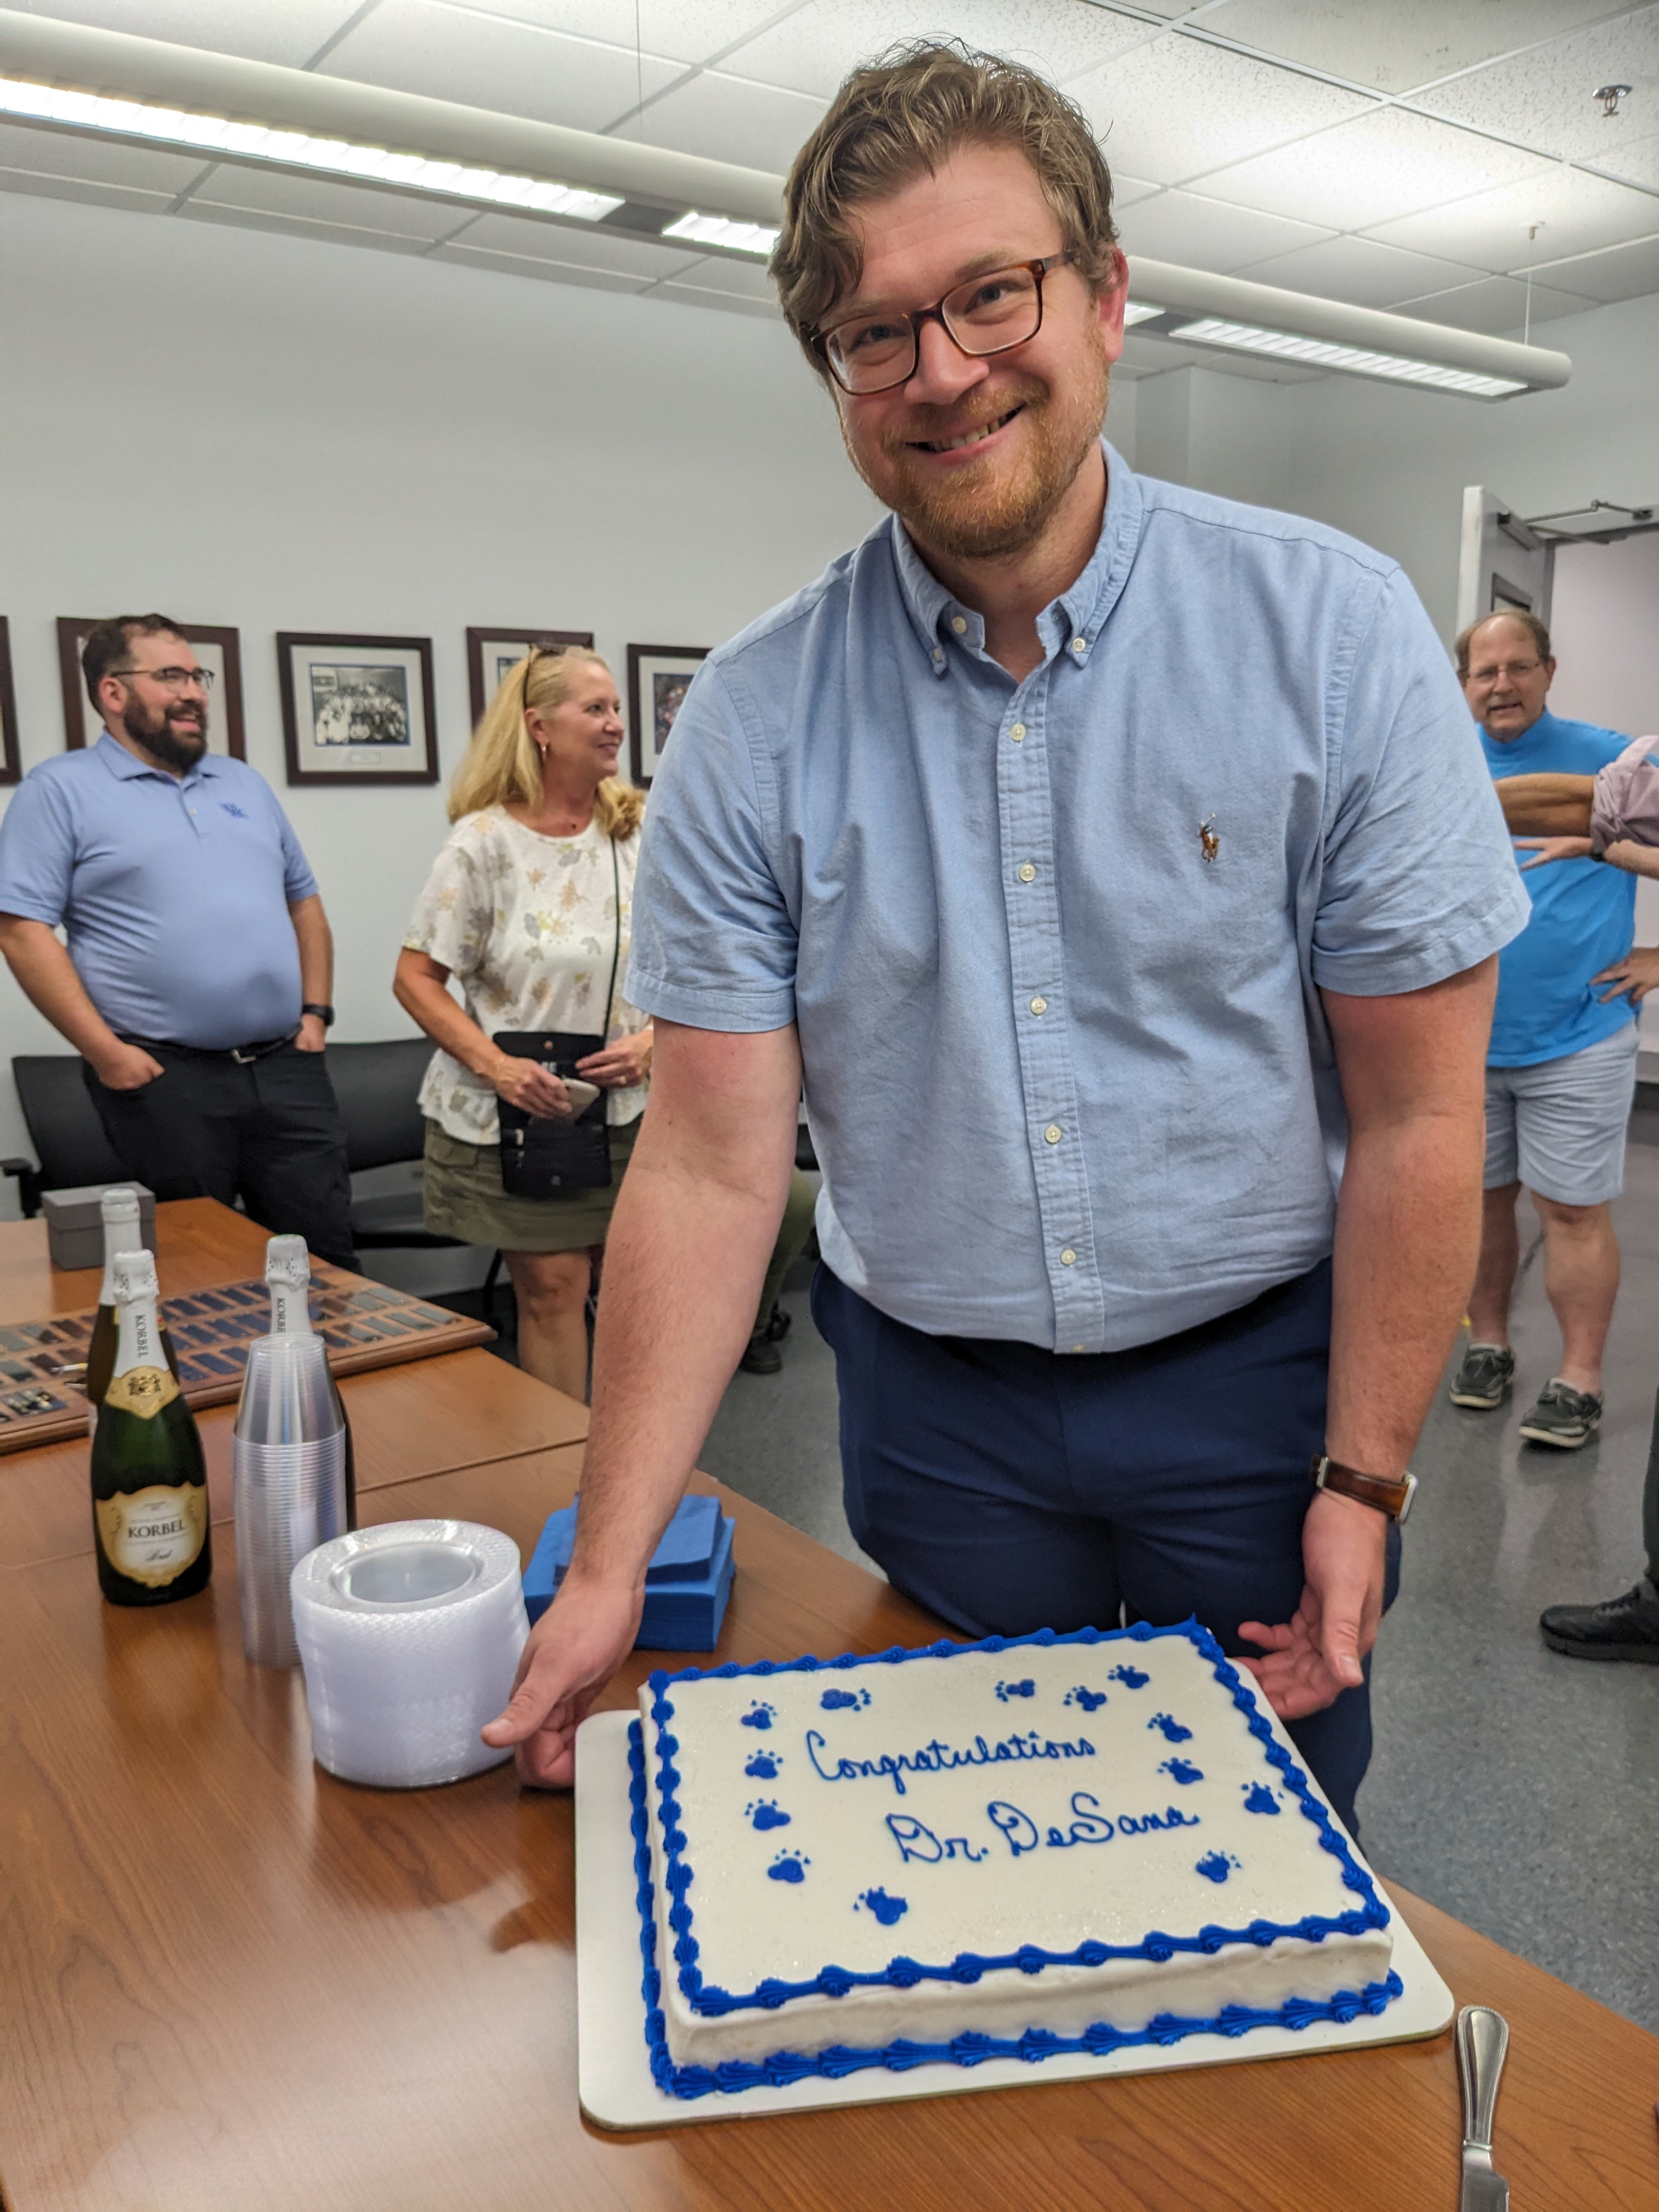 Anthony DeSana holding a cake that says "Congratulations Dr. DeSana!"